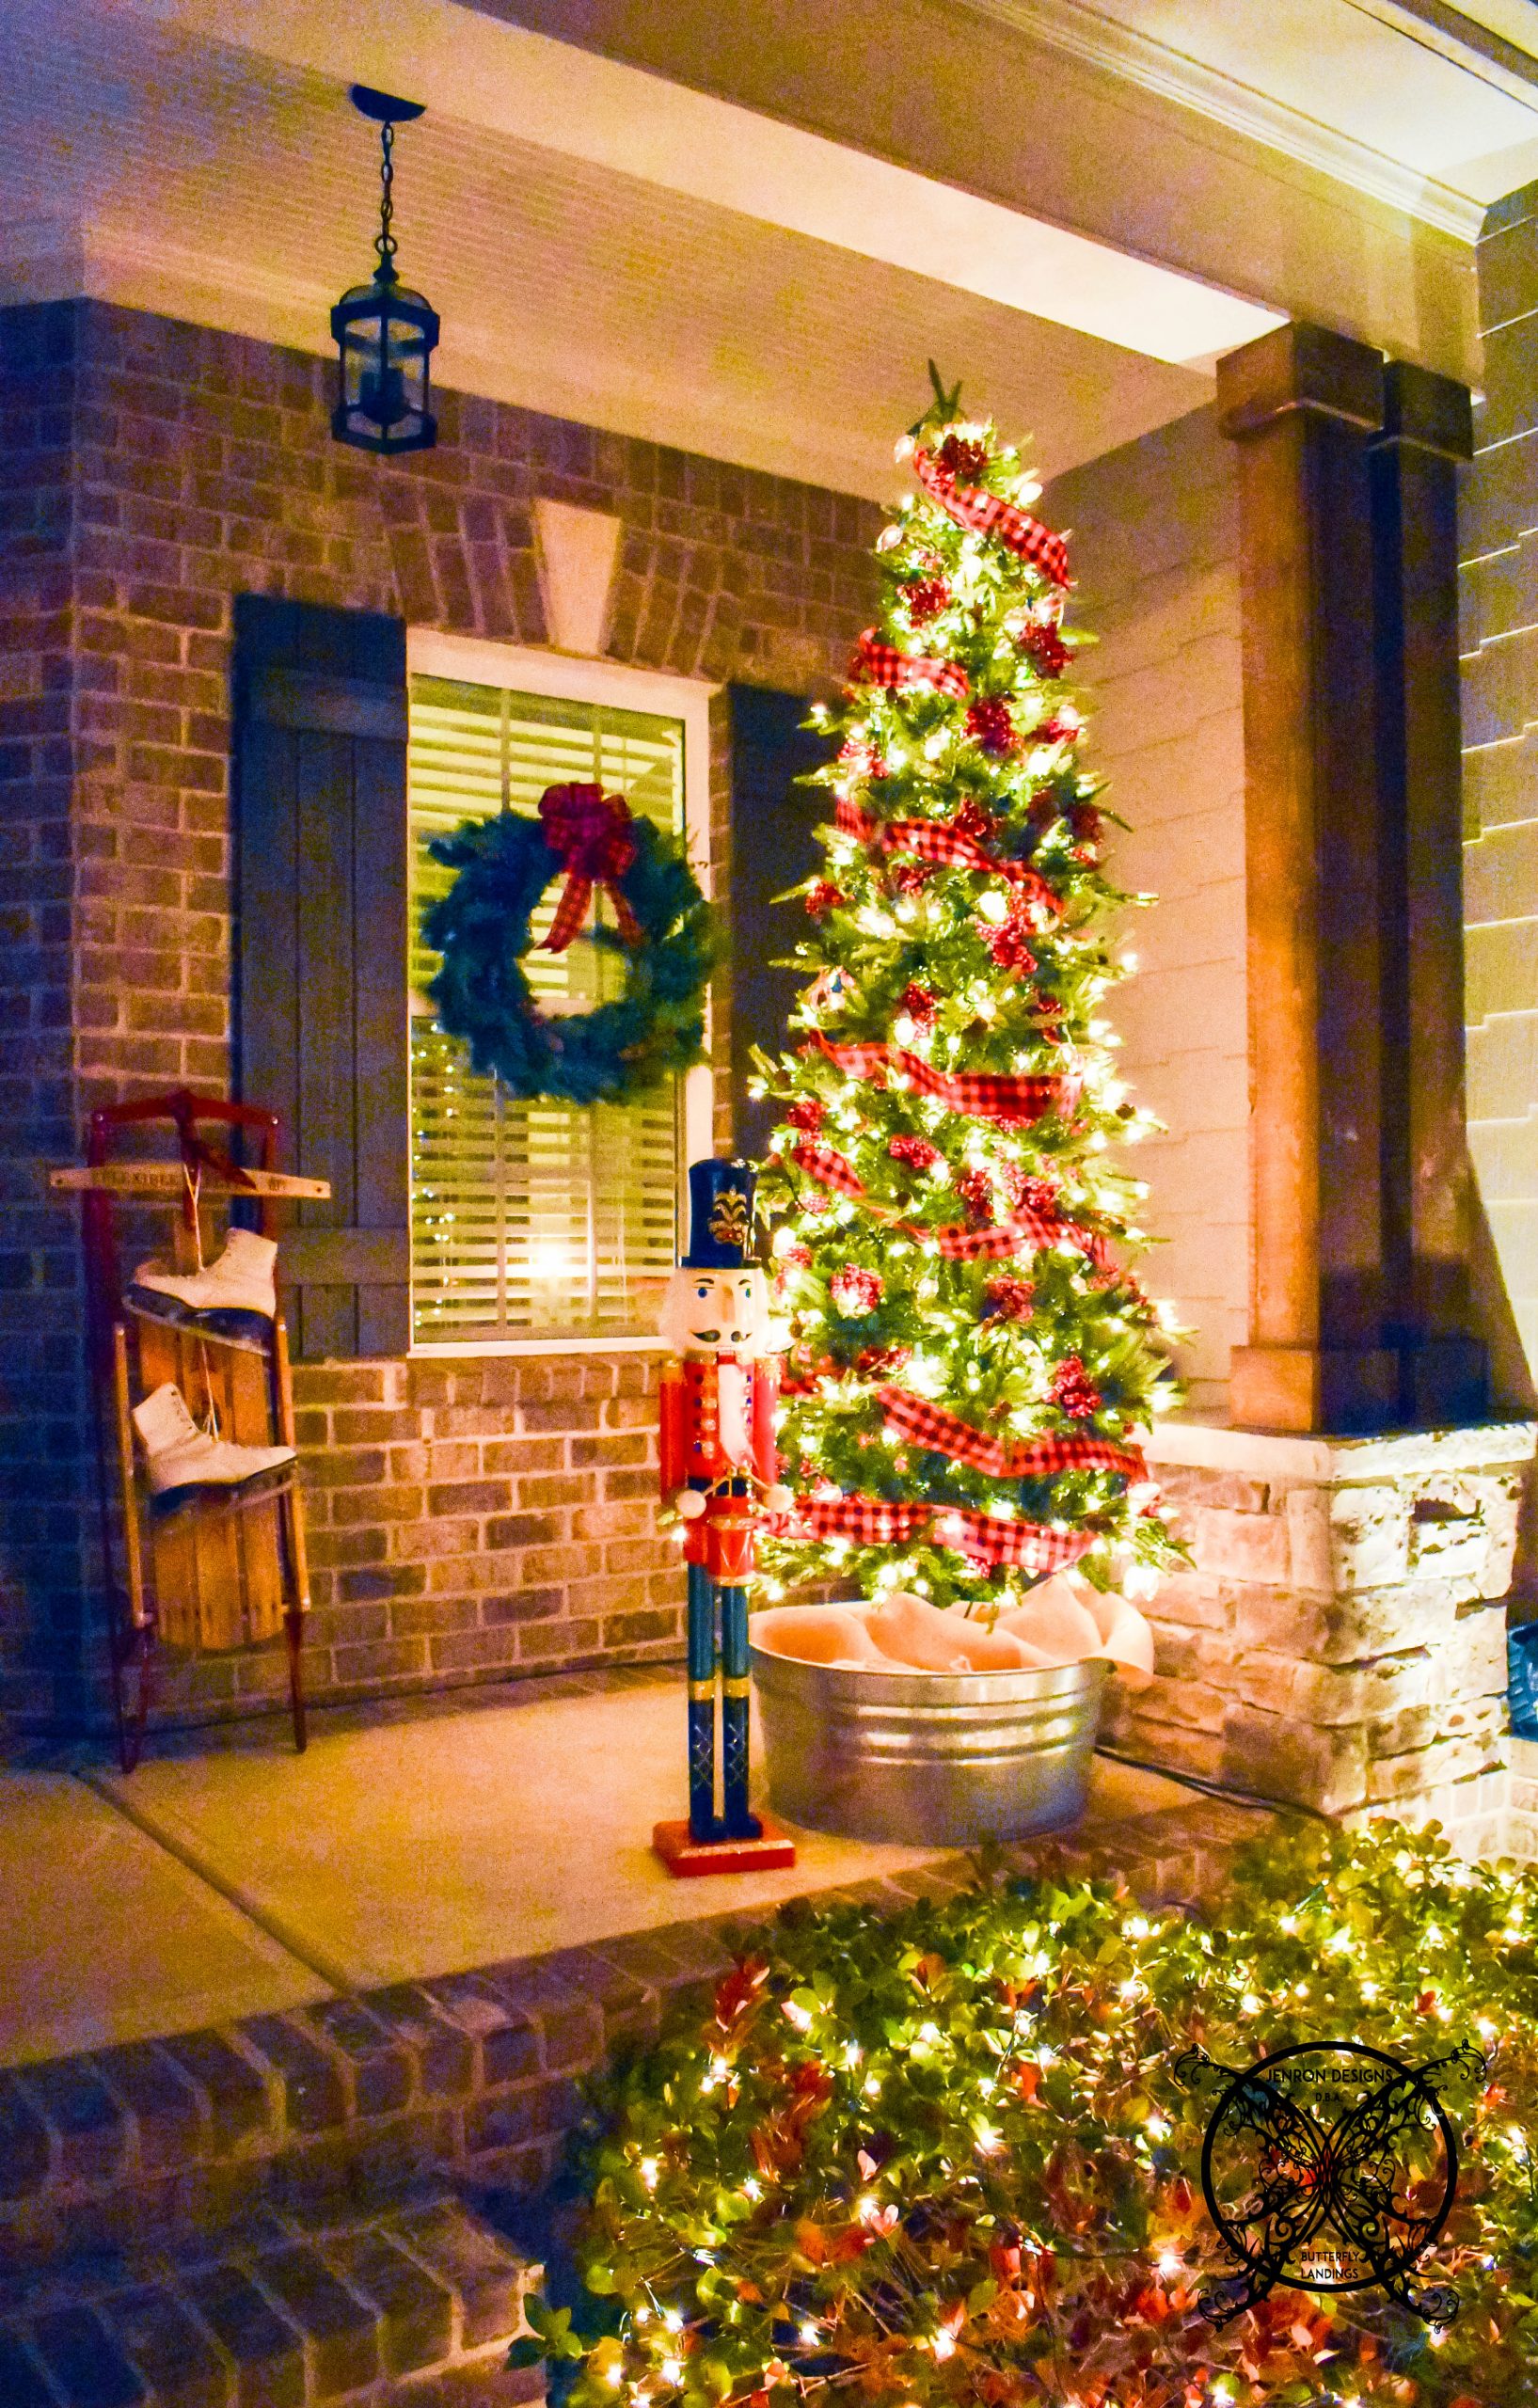 Home for The Holidays Porch LIghts Blog Hop JENRON DESIGNS